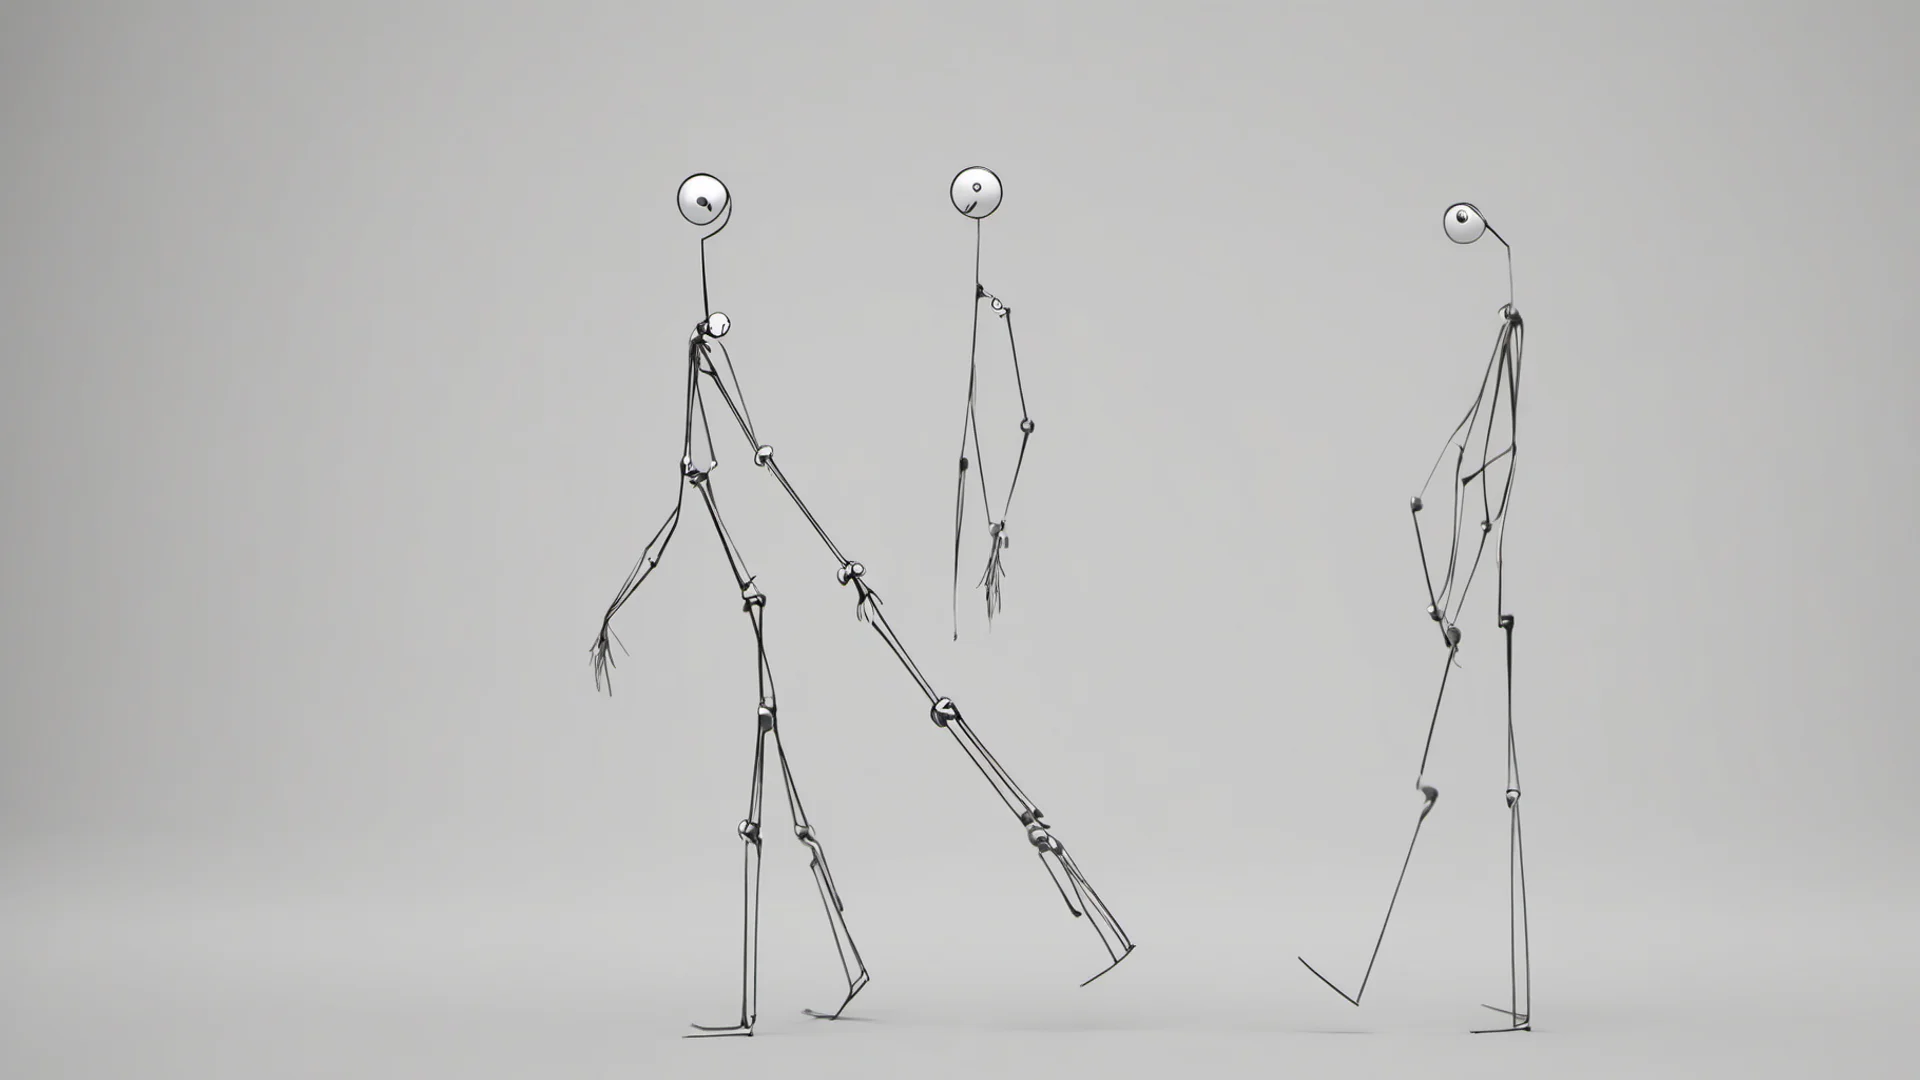 stickman walking frame by frame animation amazing awesome portrait 2 wide